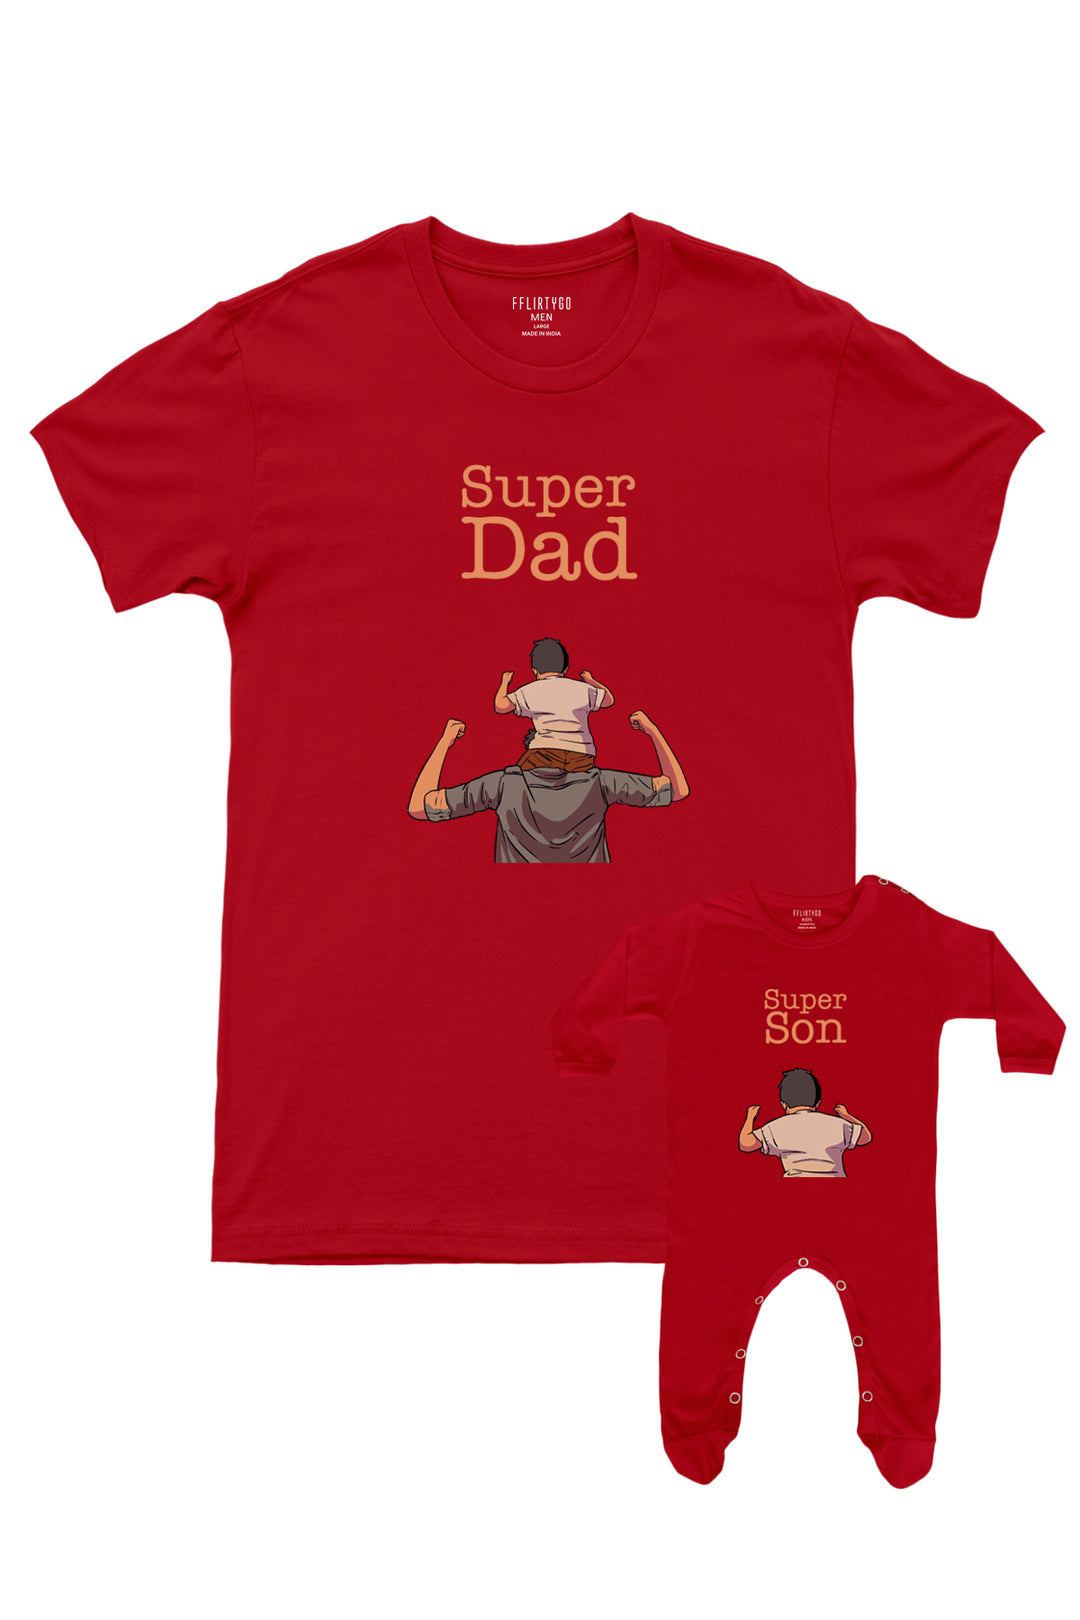 Super Dad - Super Son